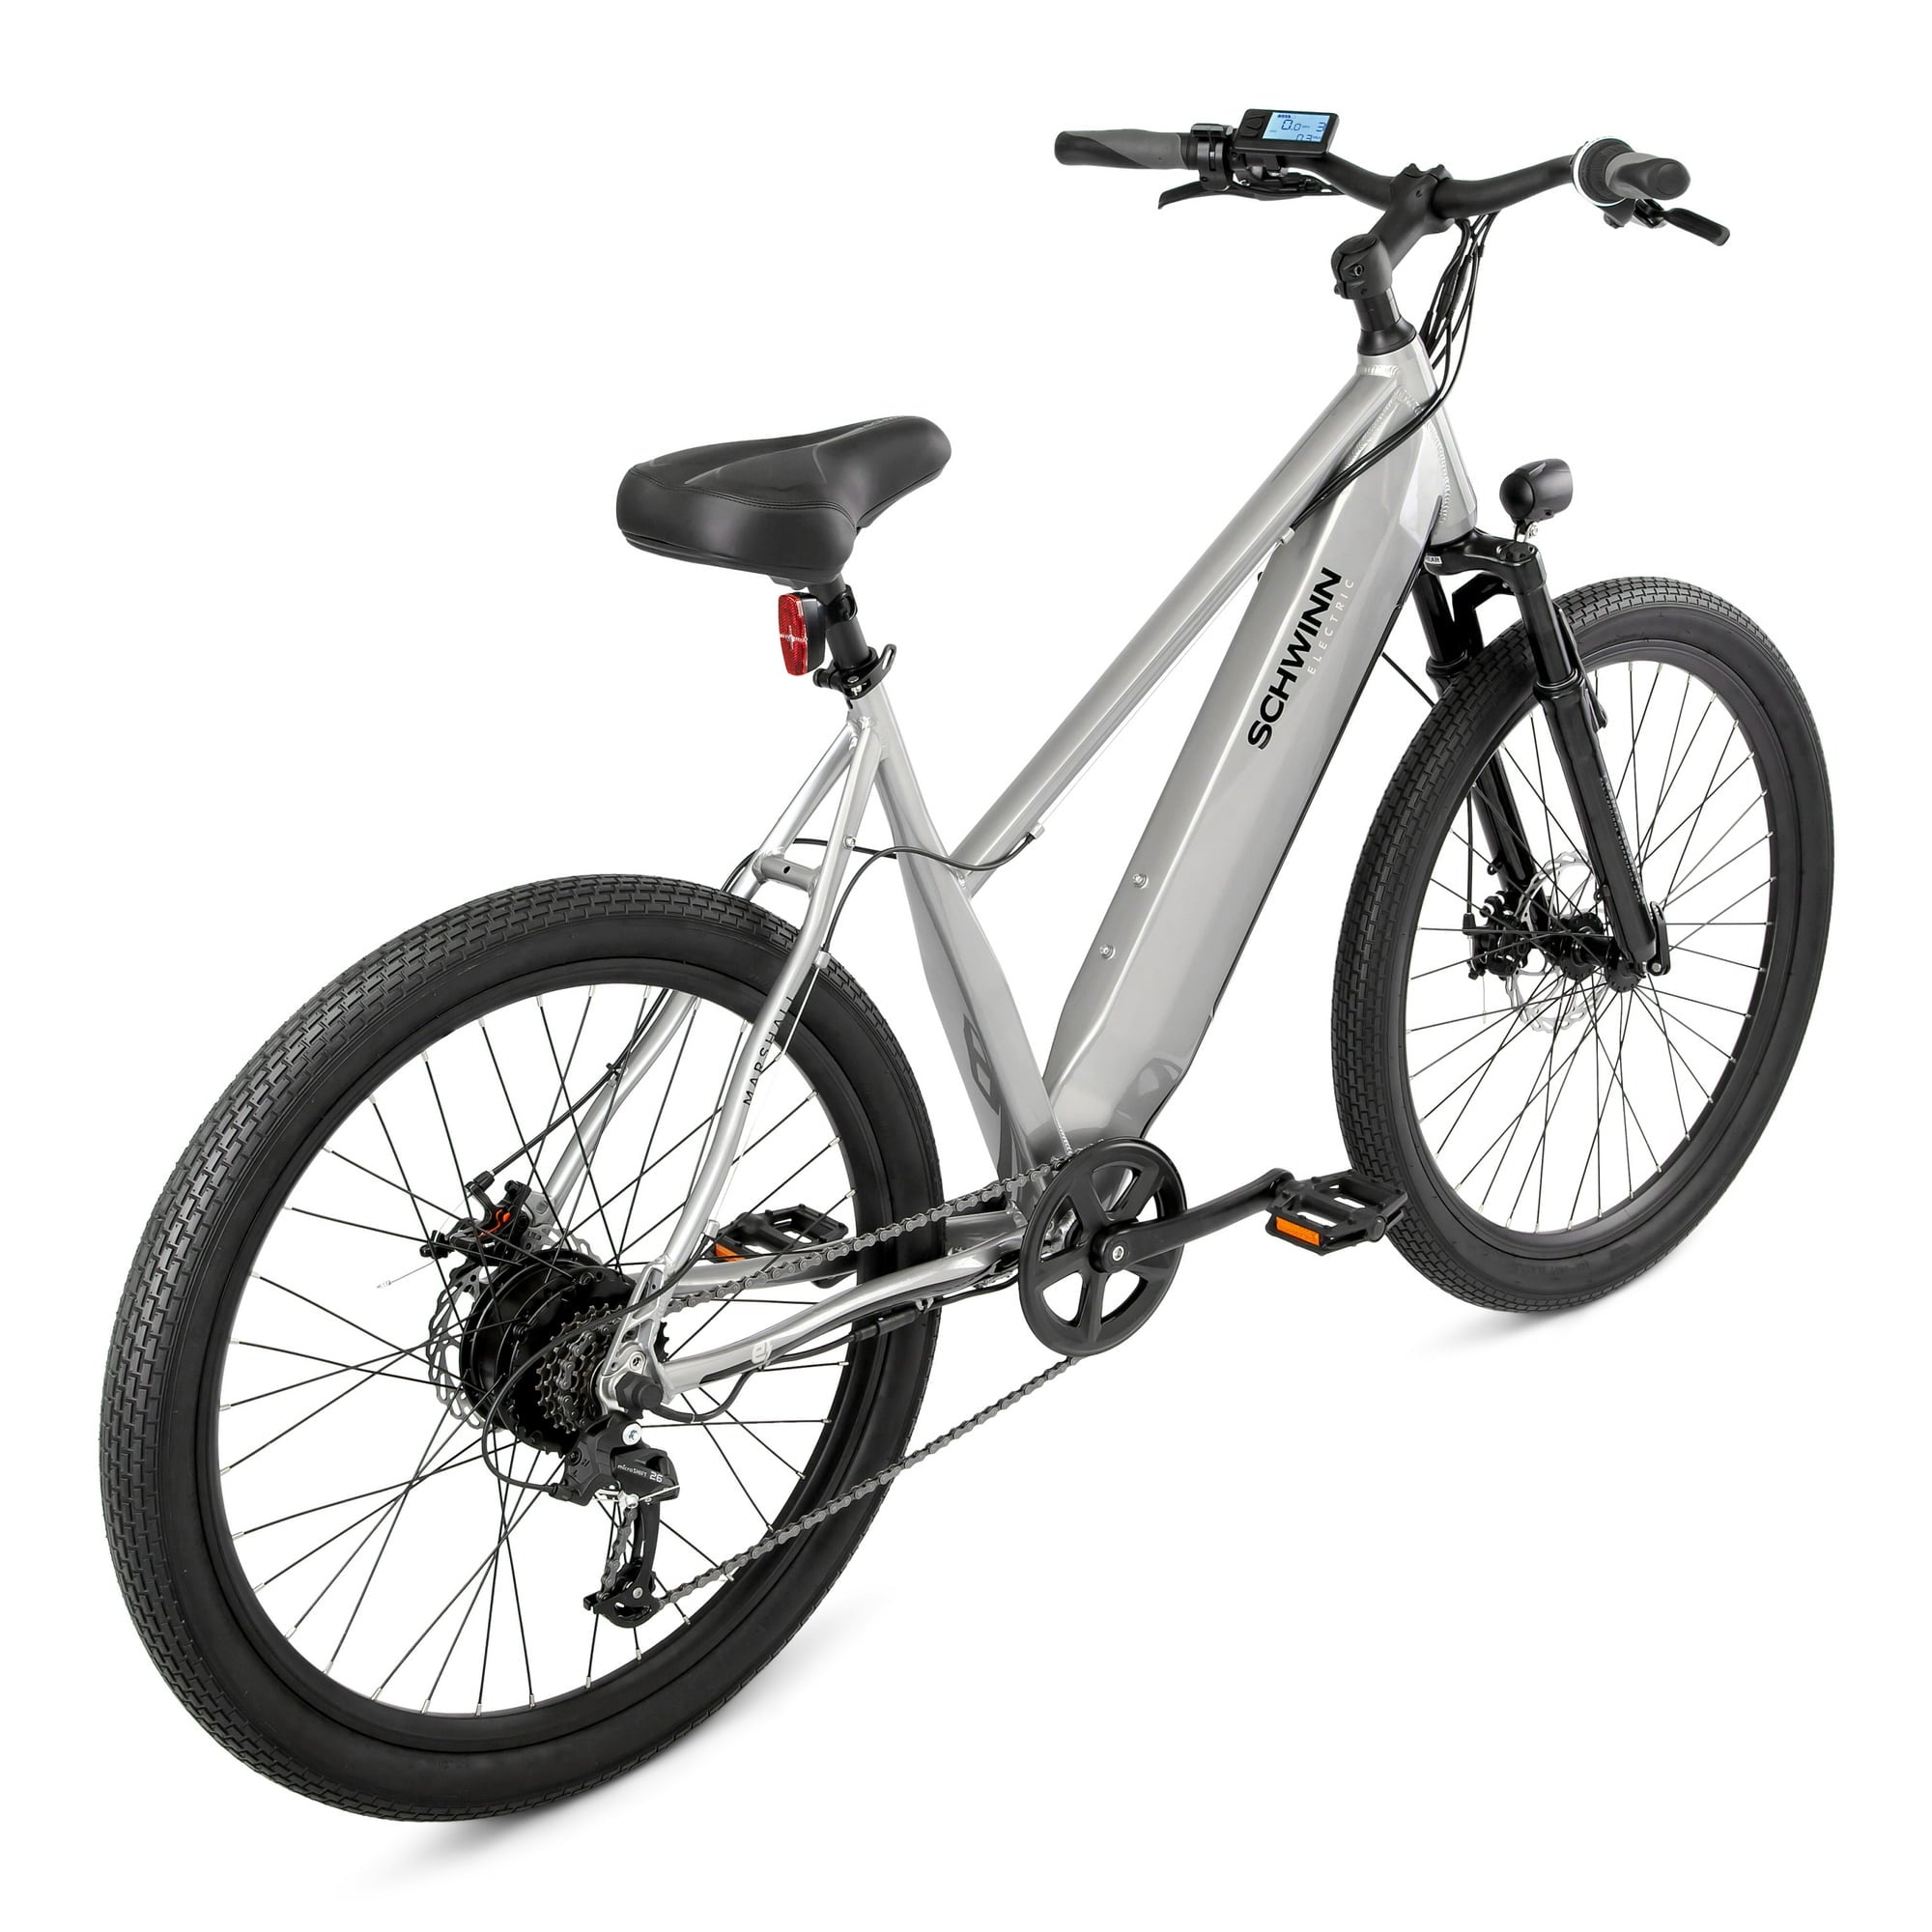 Schwinn Marshall hybrid electric bike, 7 speeds, 27.5 inch wheels, unisex frame, grey